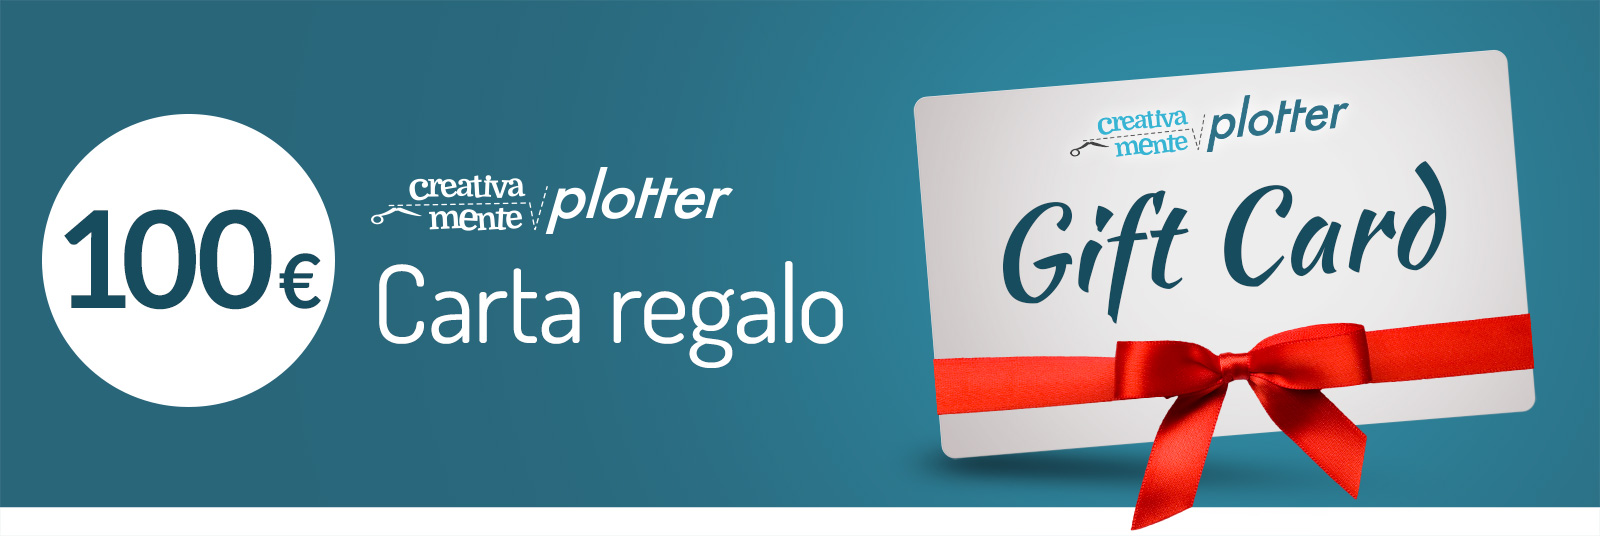 Gift-Card-2021-Creativamente-Plotter-100